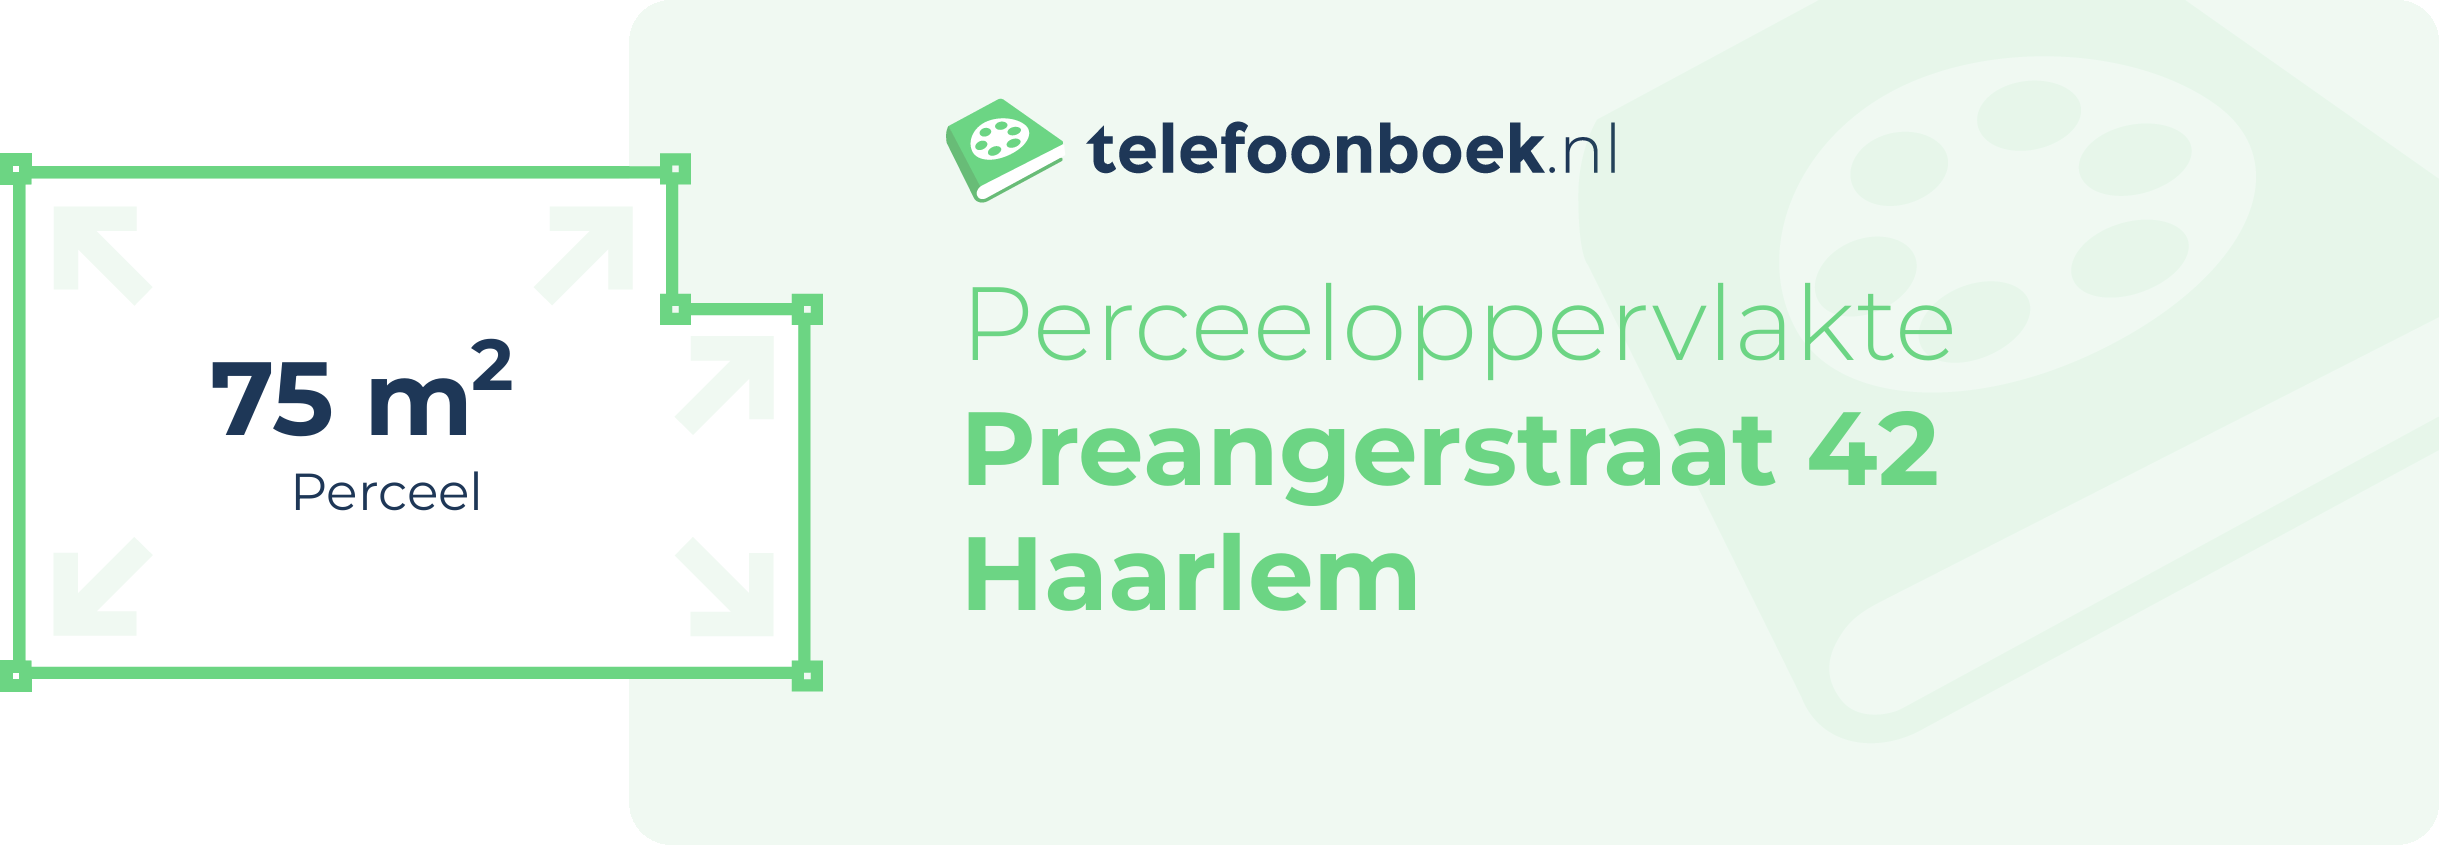 Perceeloppervlakte Preangerstraat 42 Haarlem